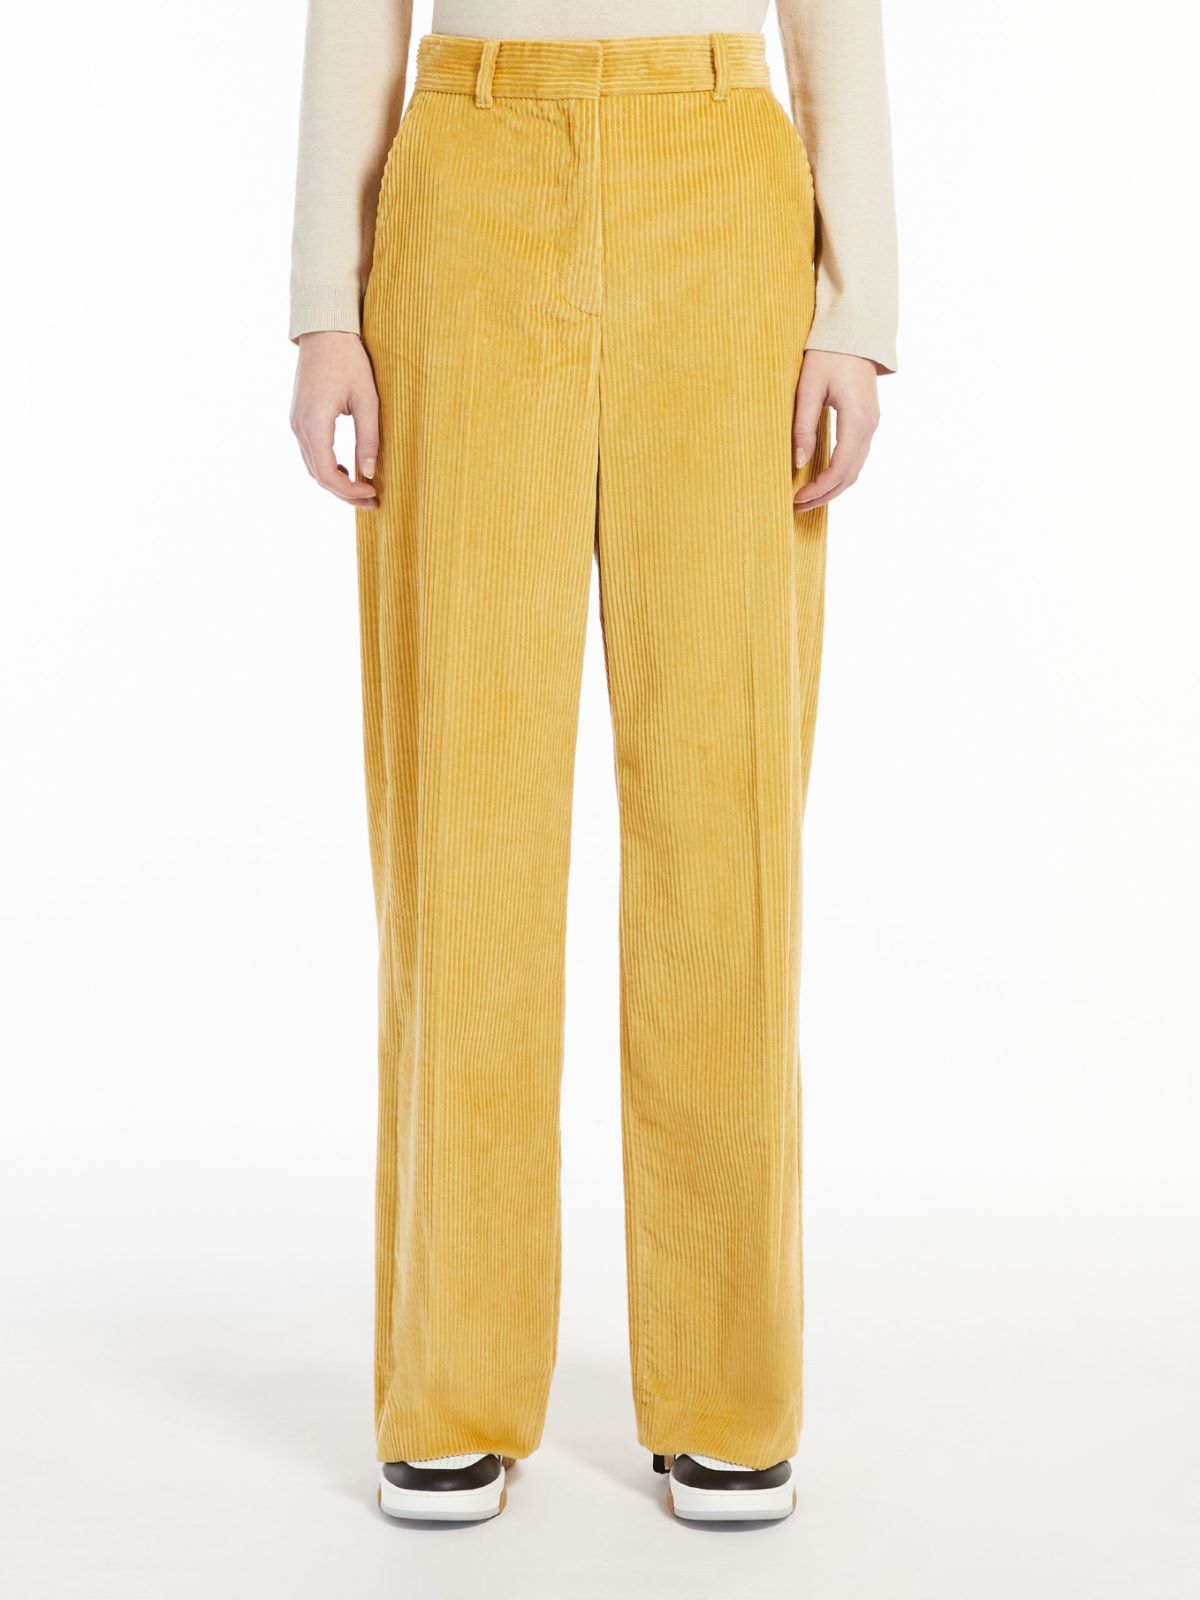 Cotton velvet trousers - GOLD - Weekend Max Mara - 2